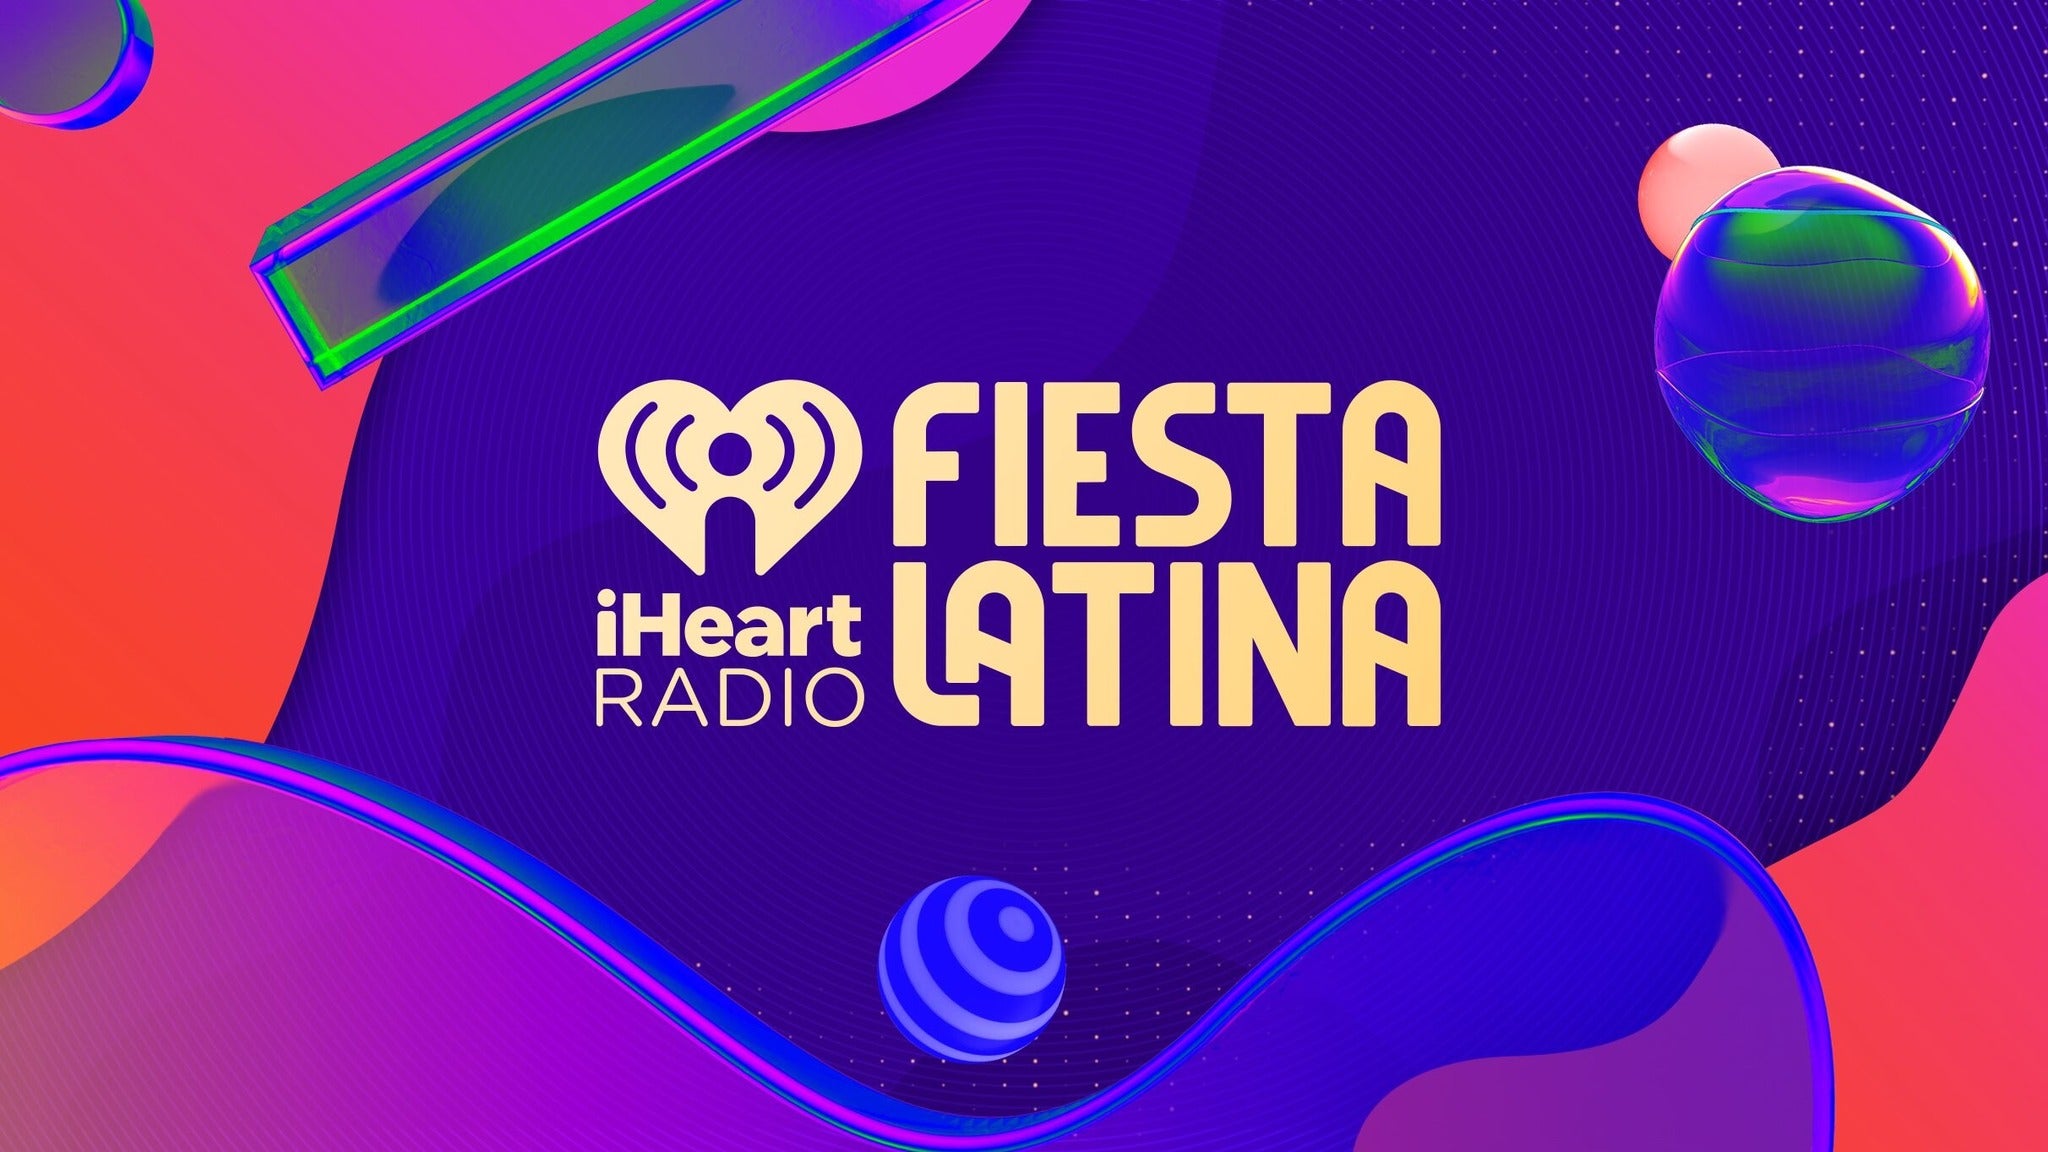 iHeartRadio Fiesta Latina Tickets, 2020 Concert Tour Dates Ticketmaster